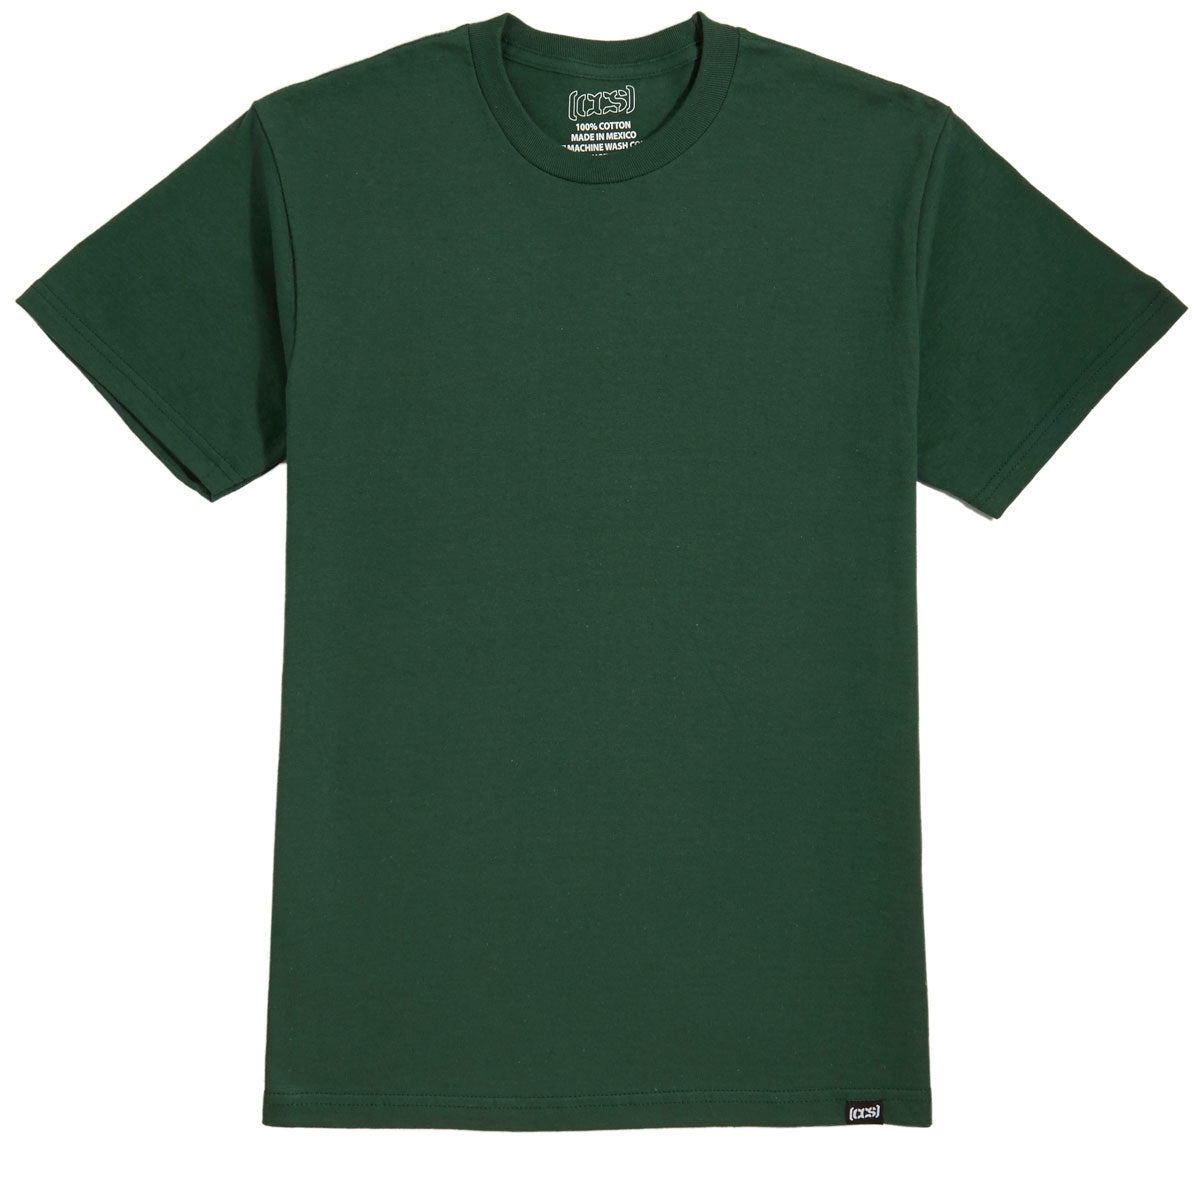 Dark green t-shirt